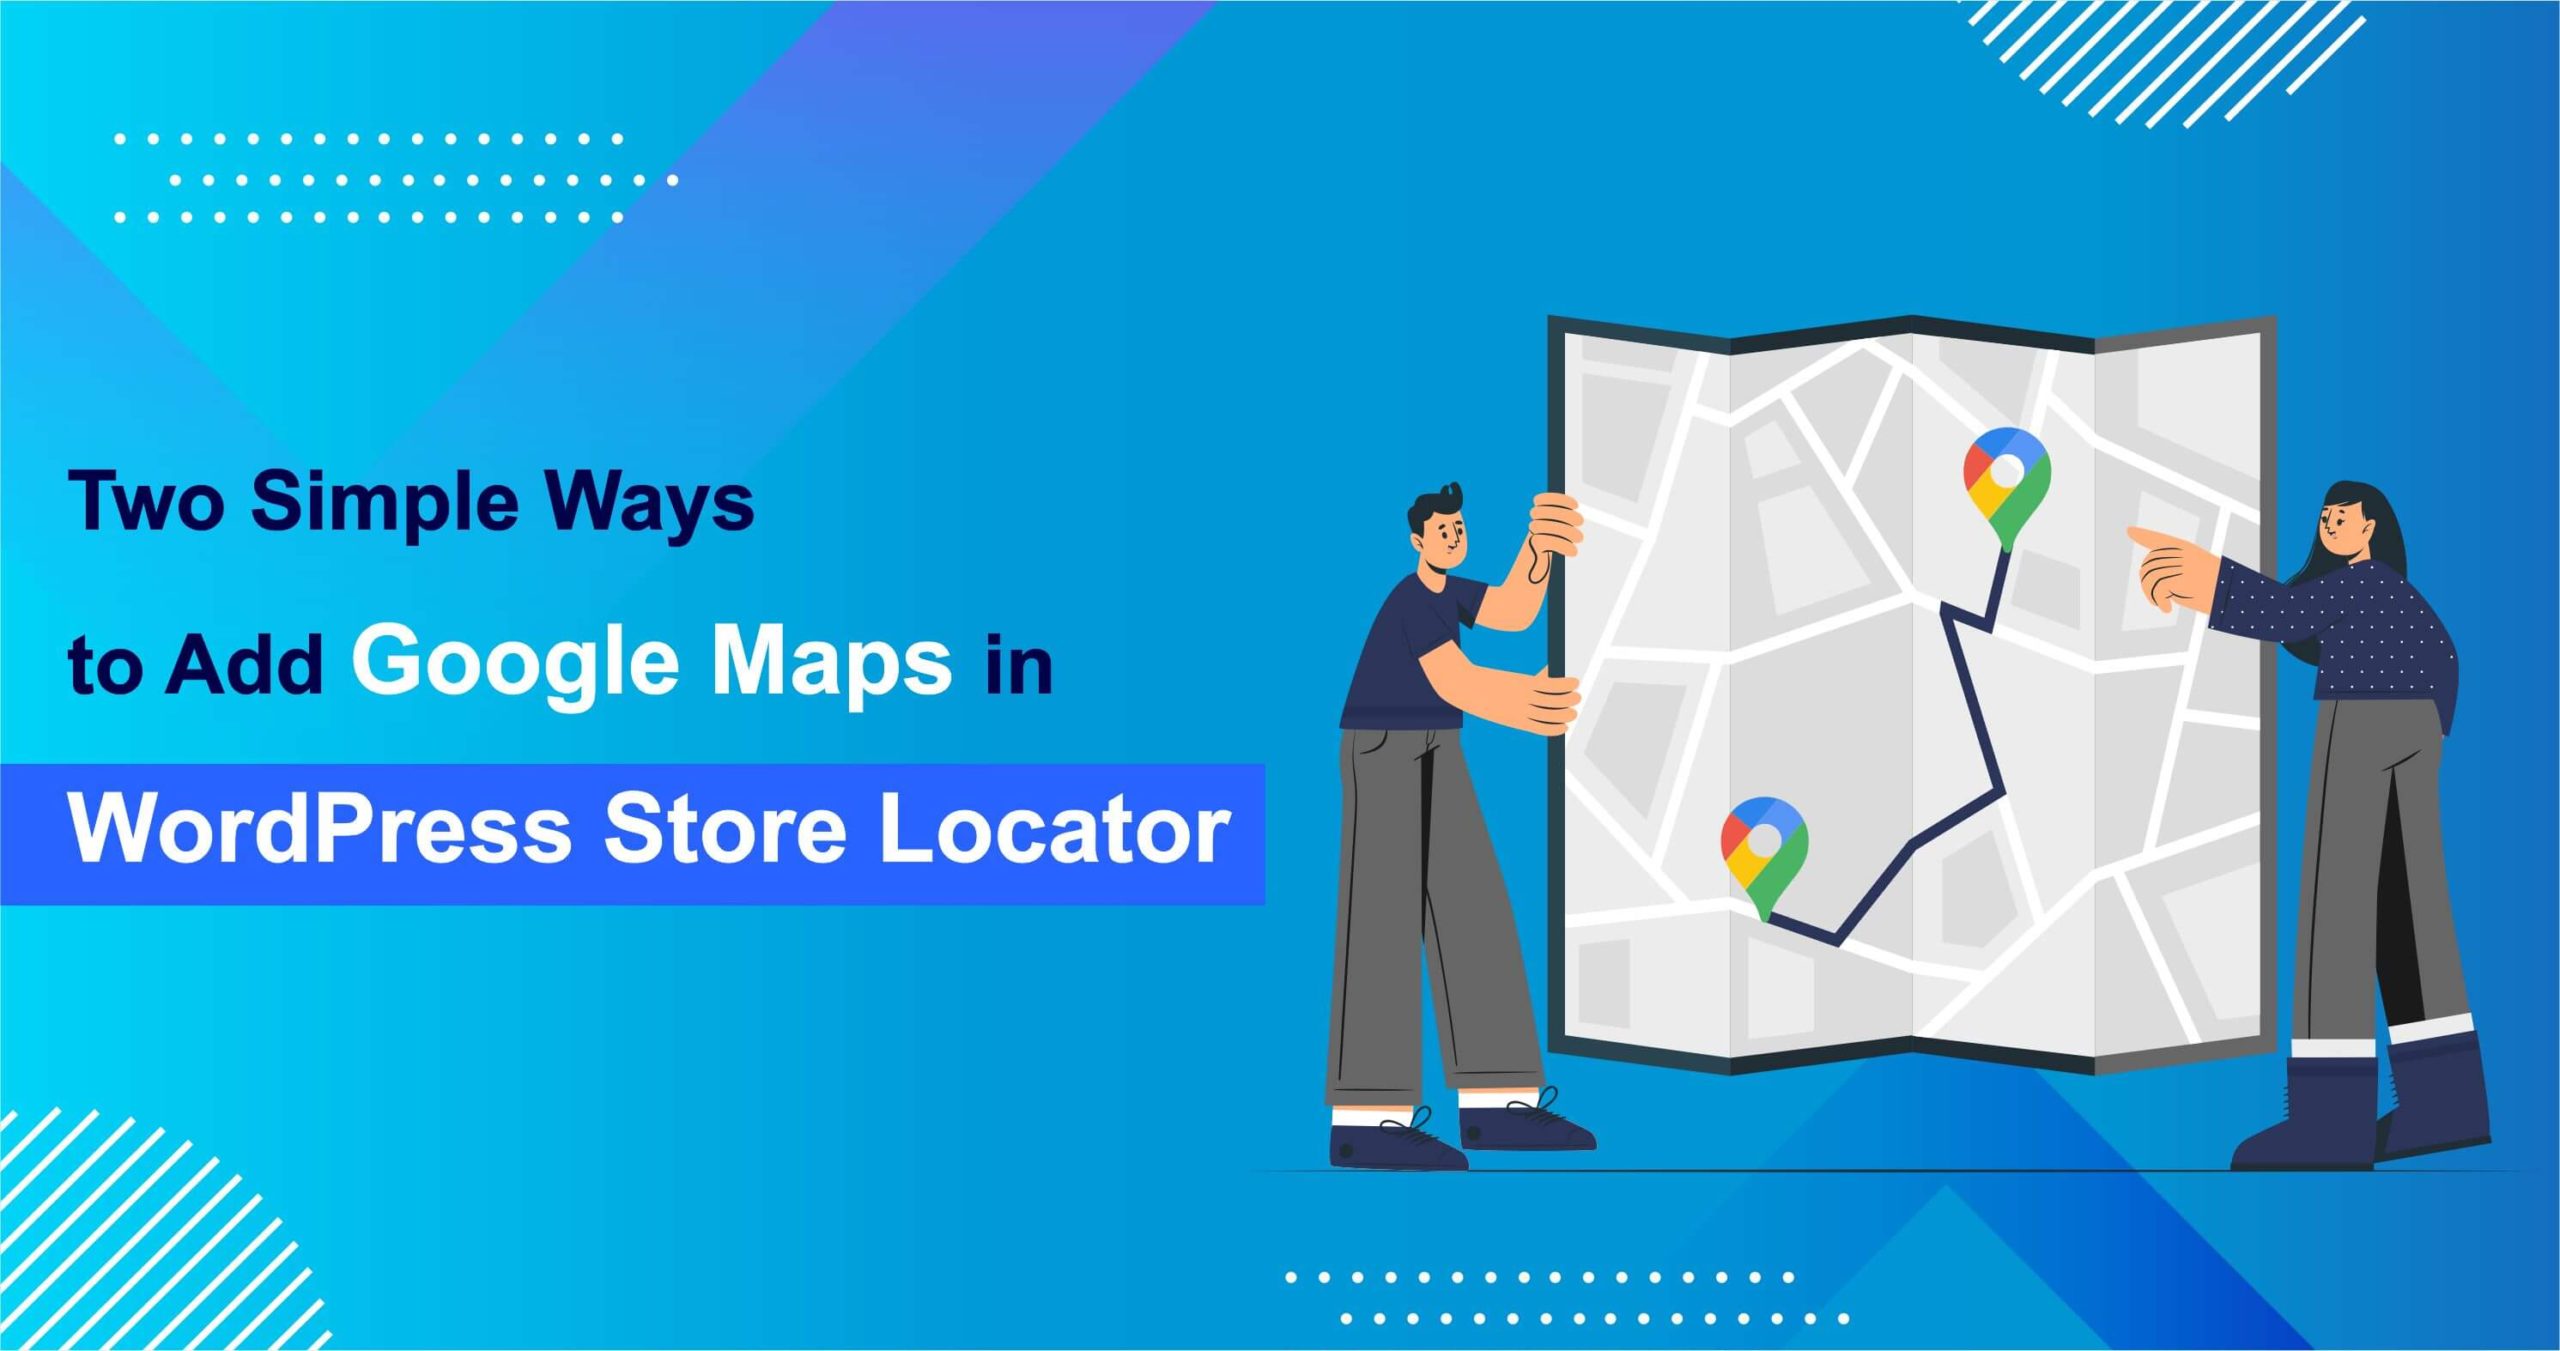 Two Simple Ways to Add Google Maps in WordPress Store Locator